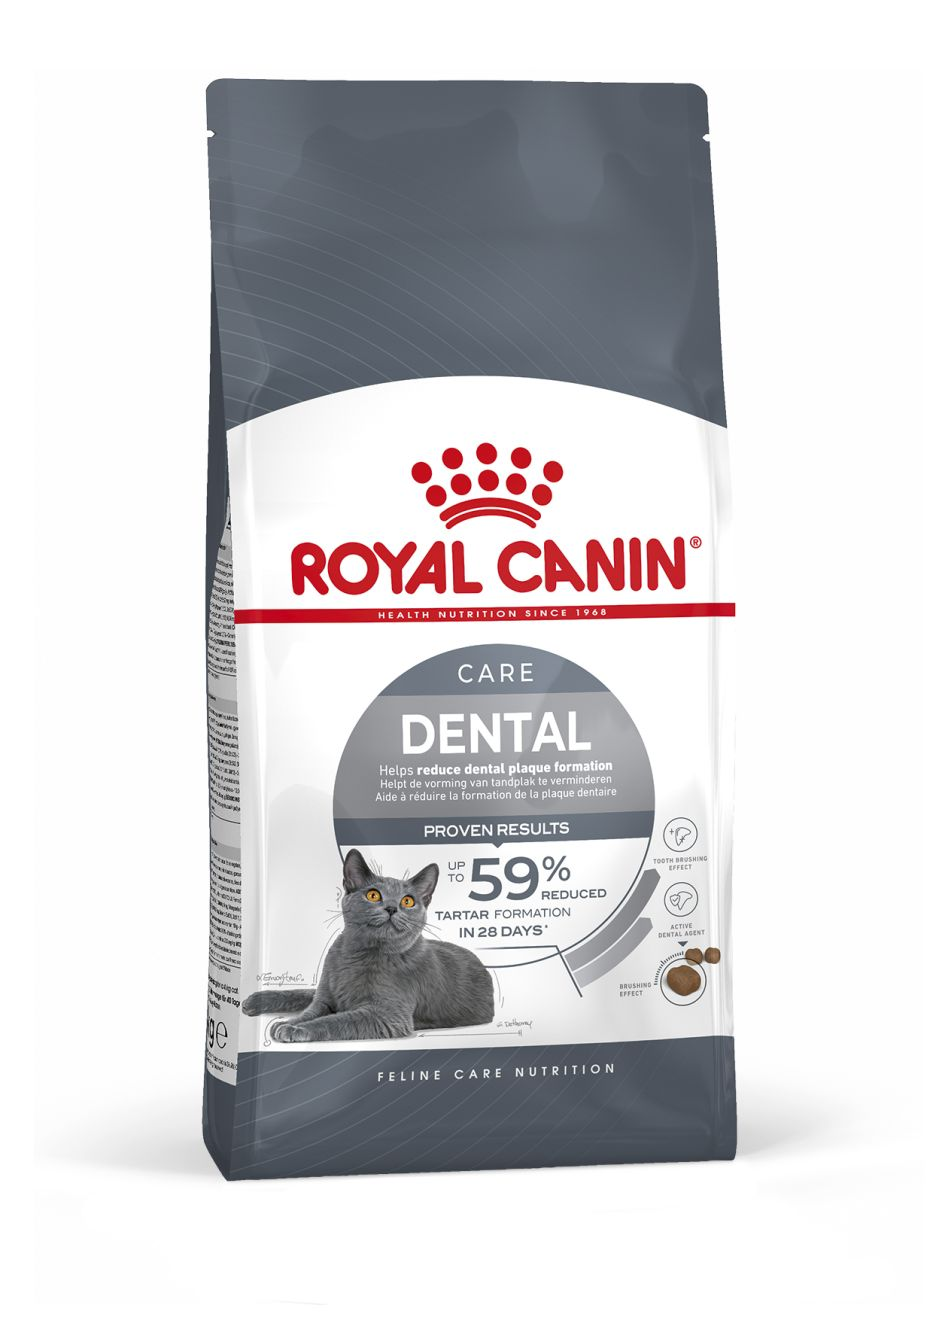 Royal Canin Dental care